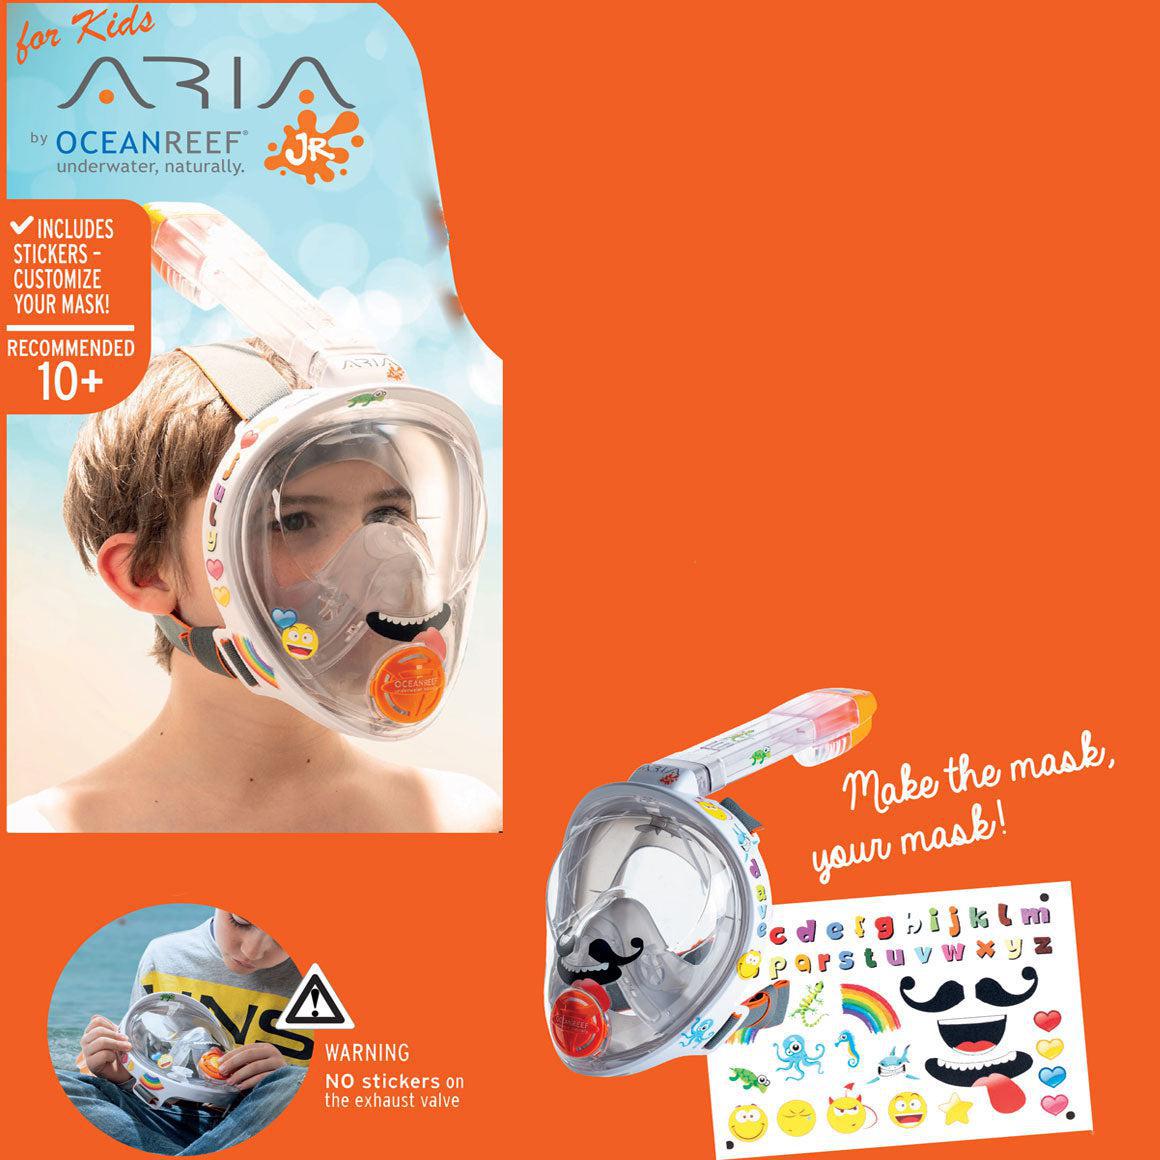 Ocean Reef ARIA JR Full Face Snorkeling Mask - White Size XS-